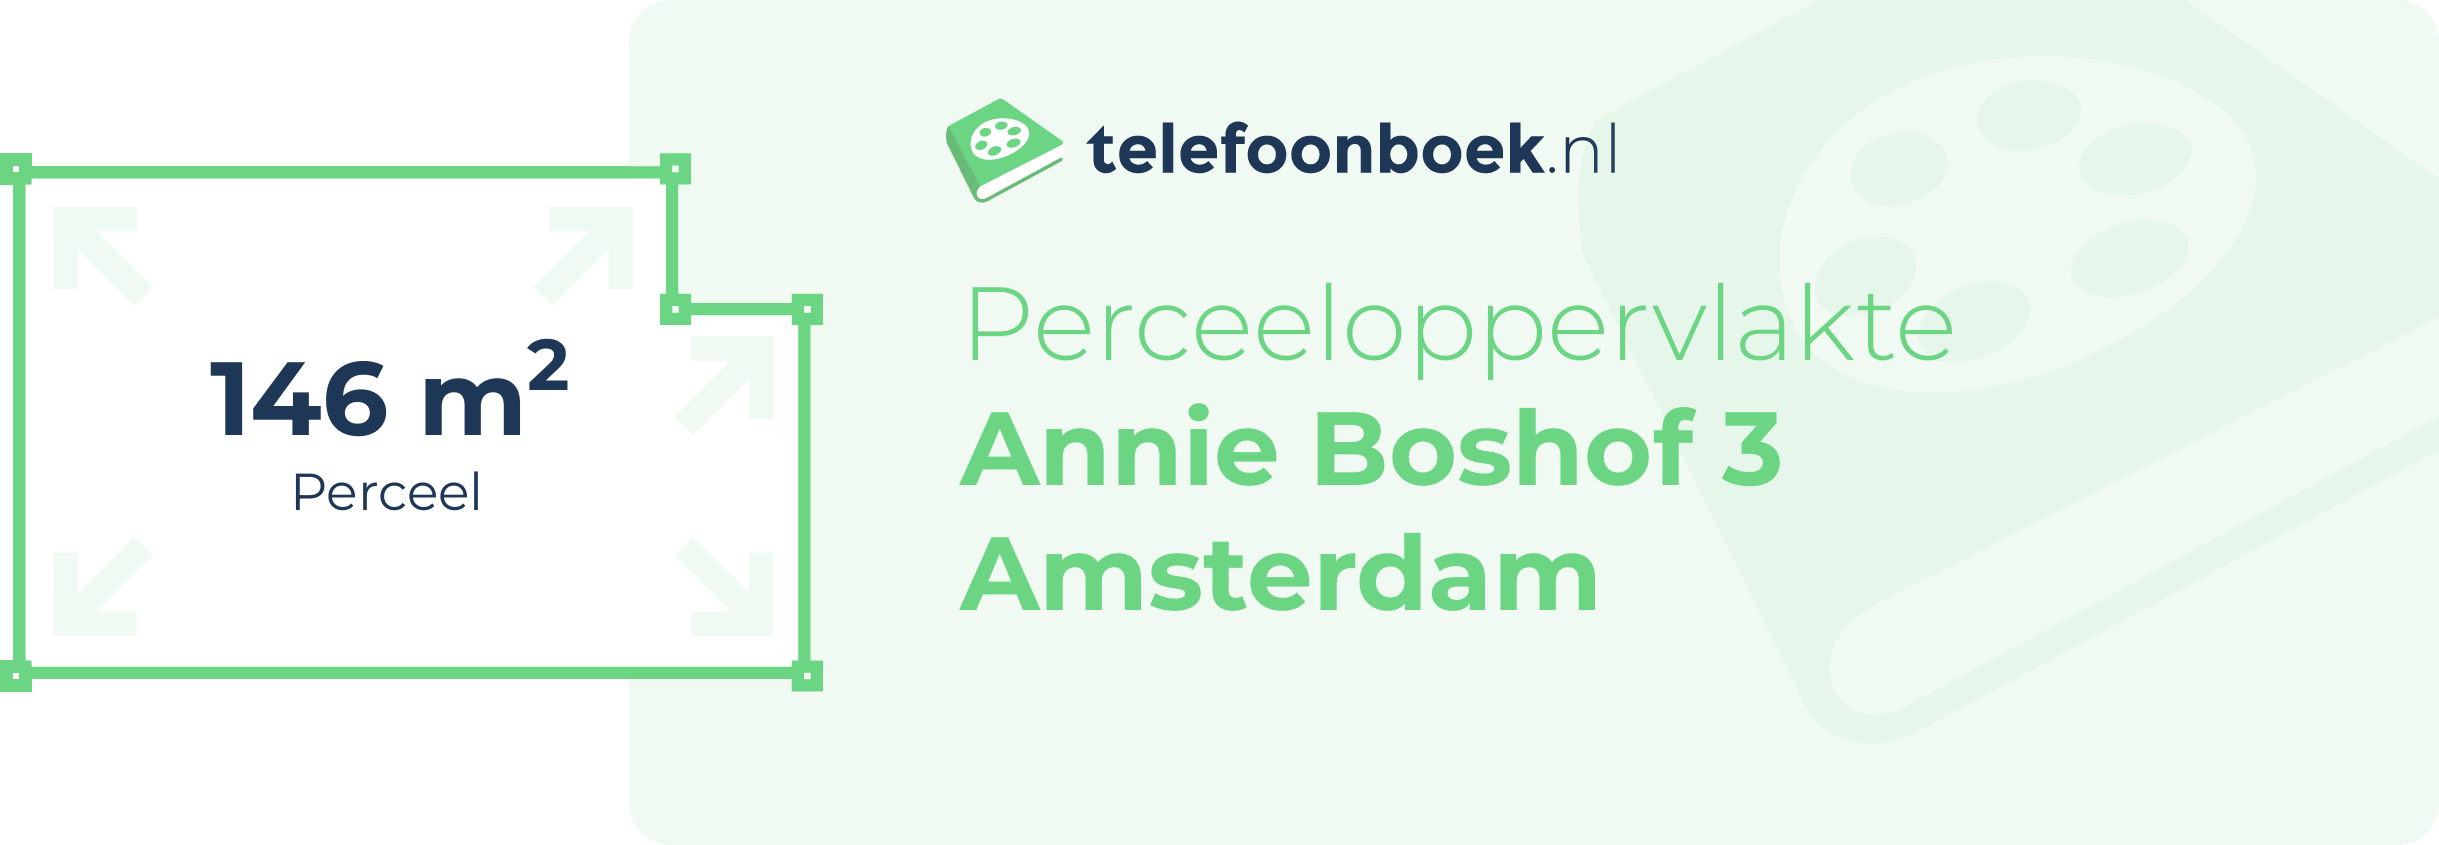 Perceeloppervlakte Annie Boshof 3 Amsterdam